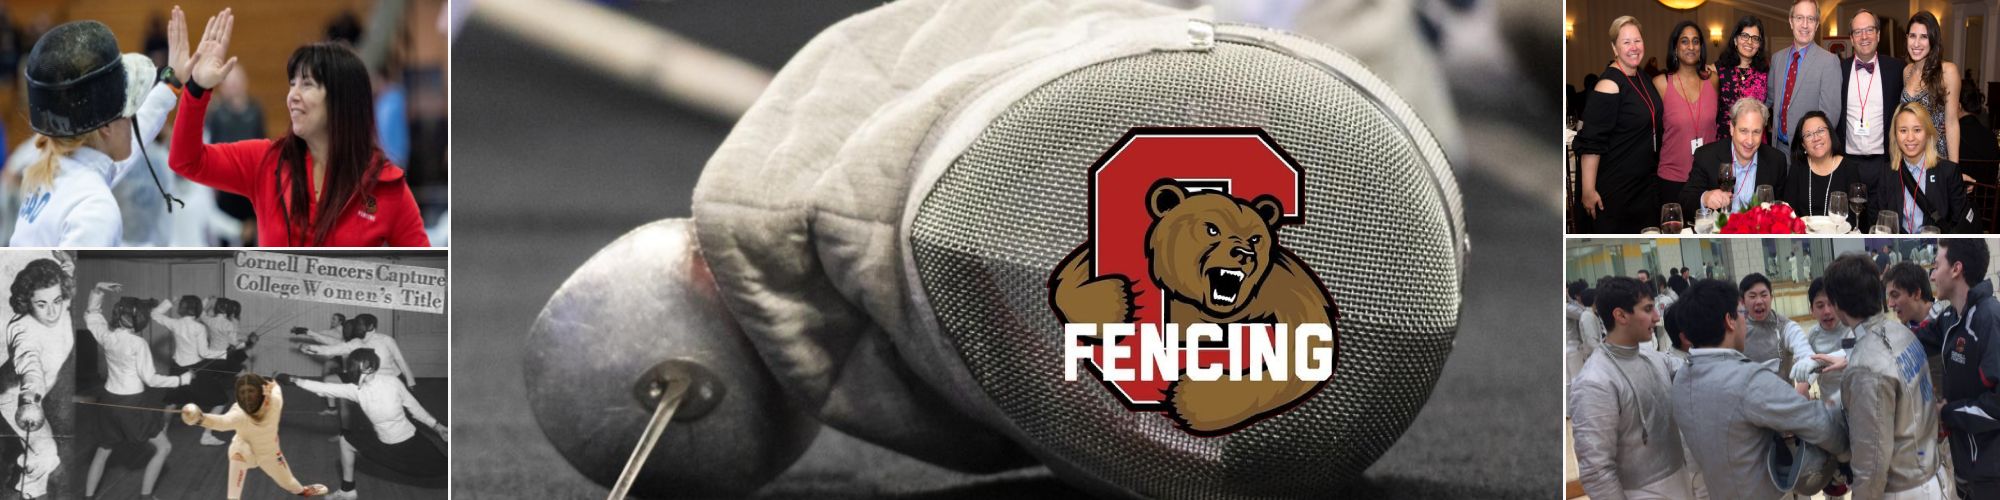 Cornell Fencing